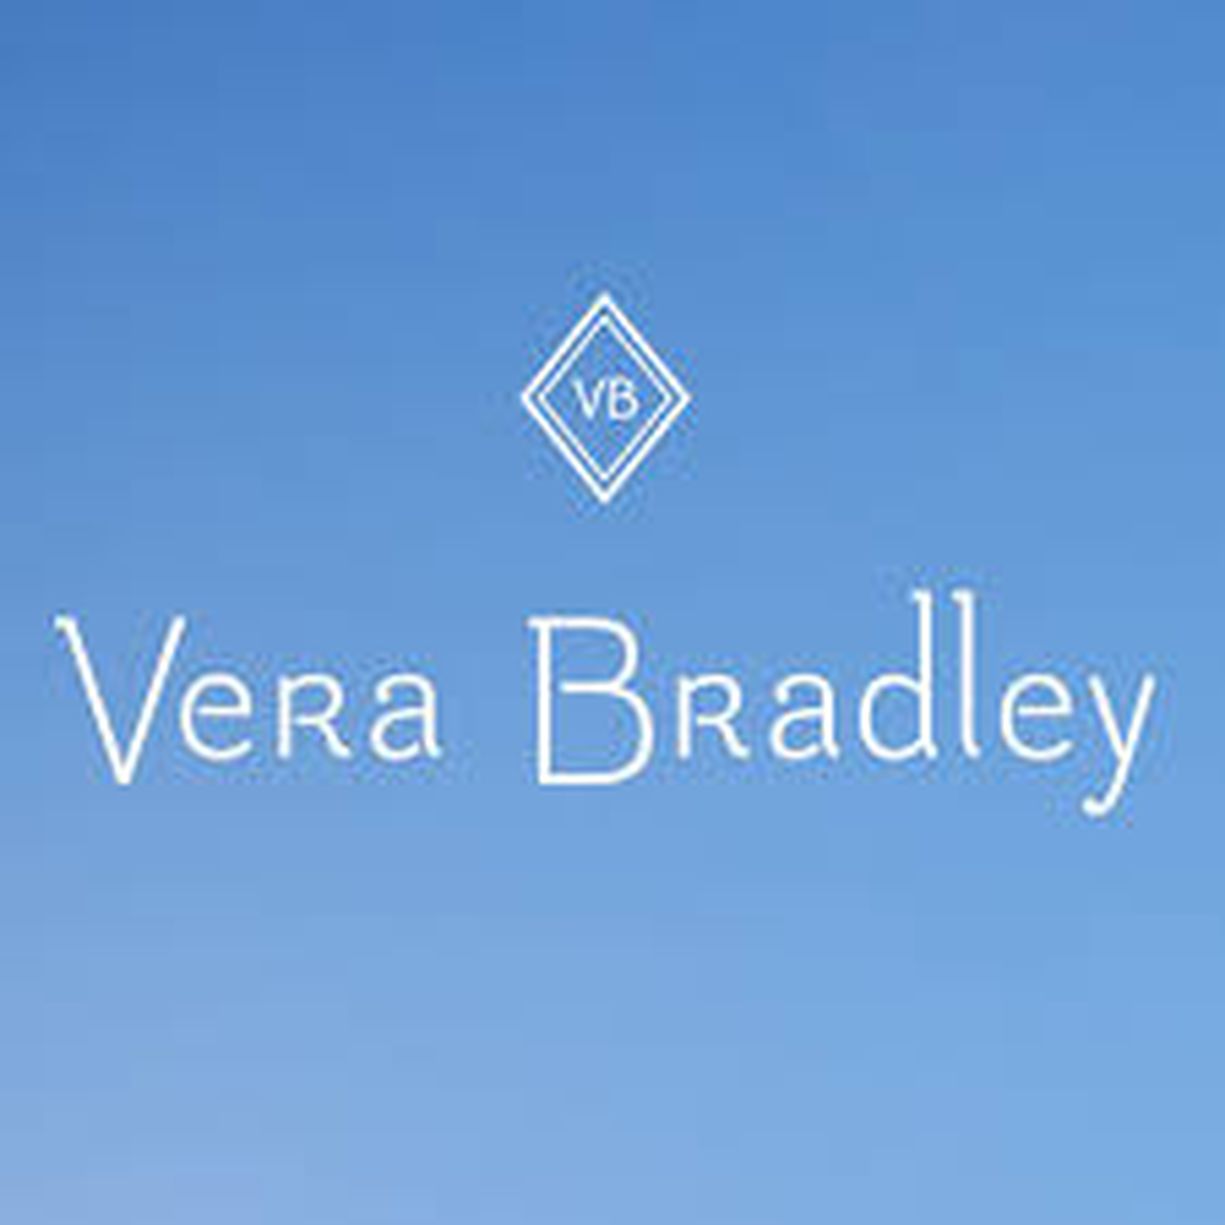 Vera Bradley introducerar Metaverse And Debut NFT Collection